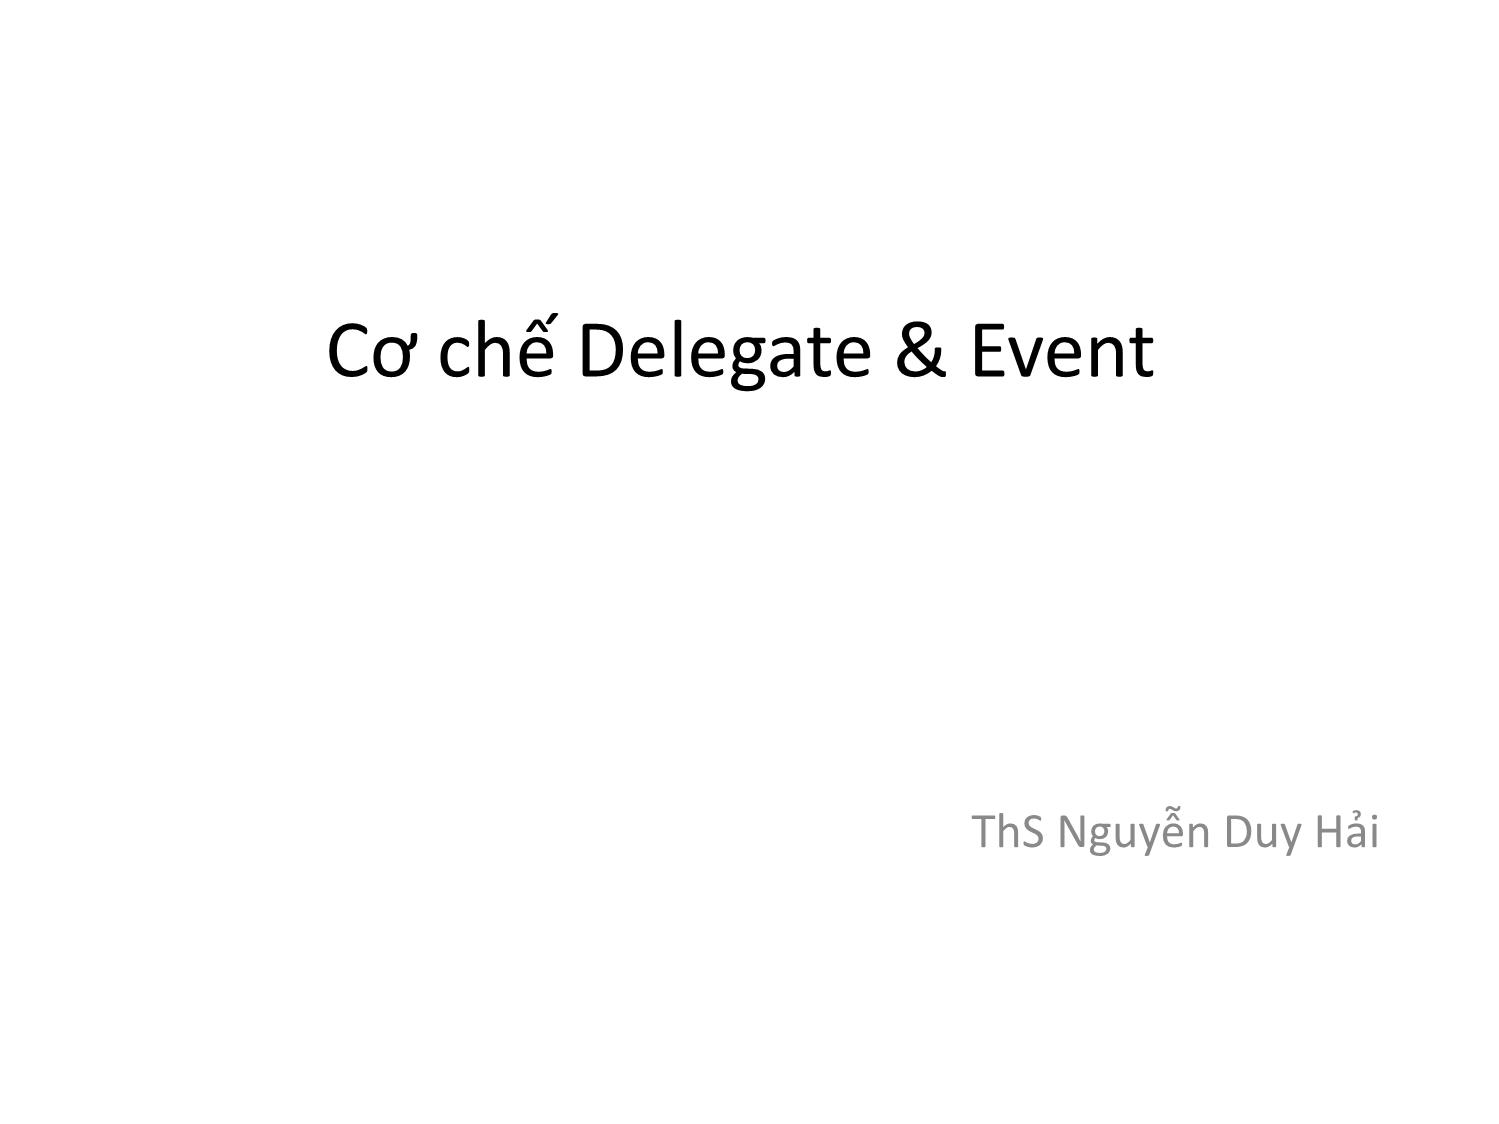 Cơ chế Delegate & Event trang 1